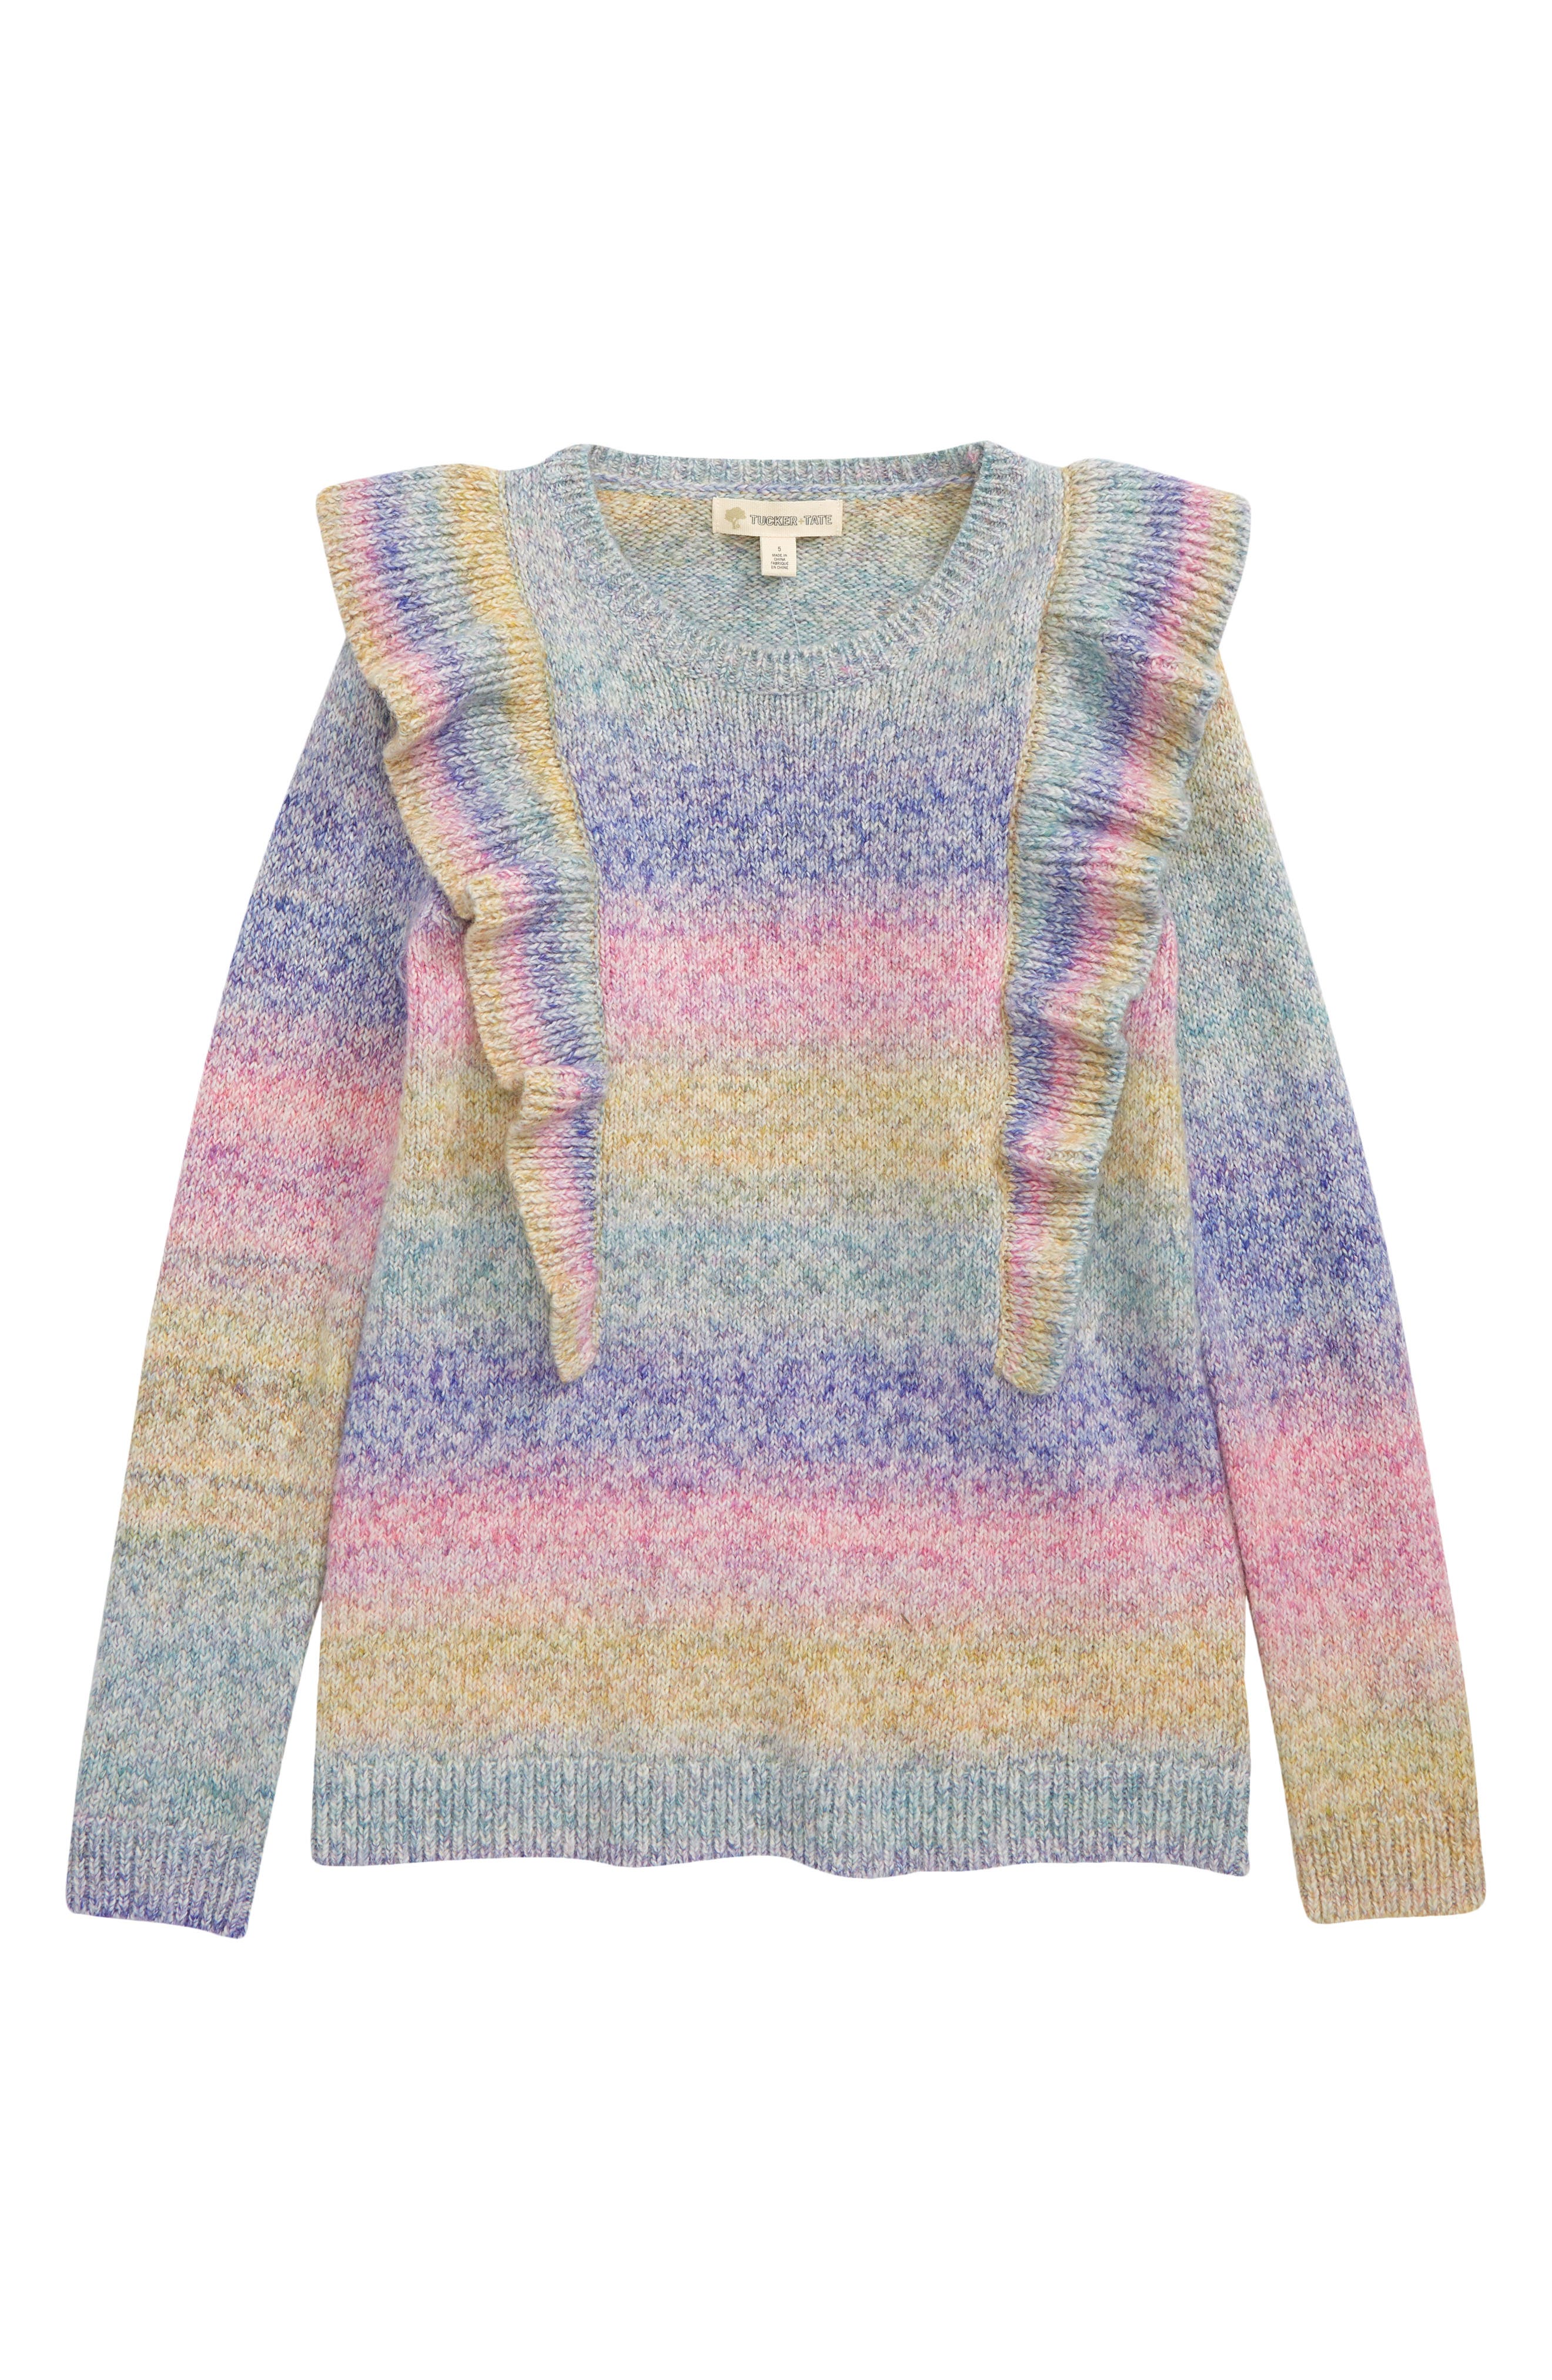 Tucker Tate Toddler Girl's Ruffle Icon Sweater~Cotton~24M~NWT~$32 